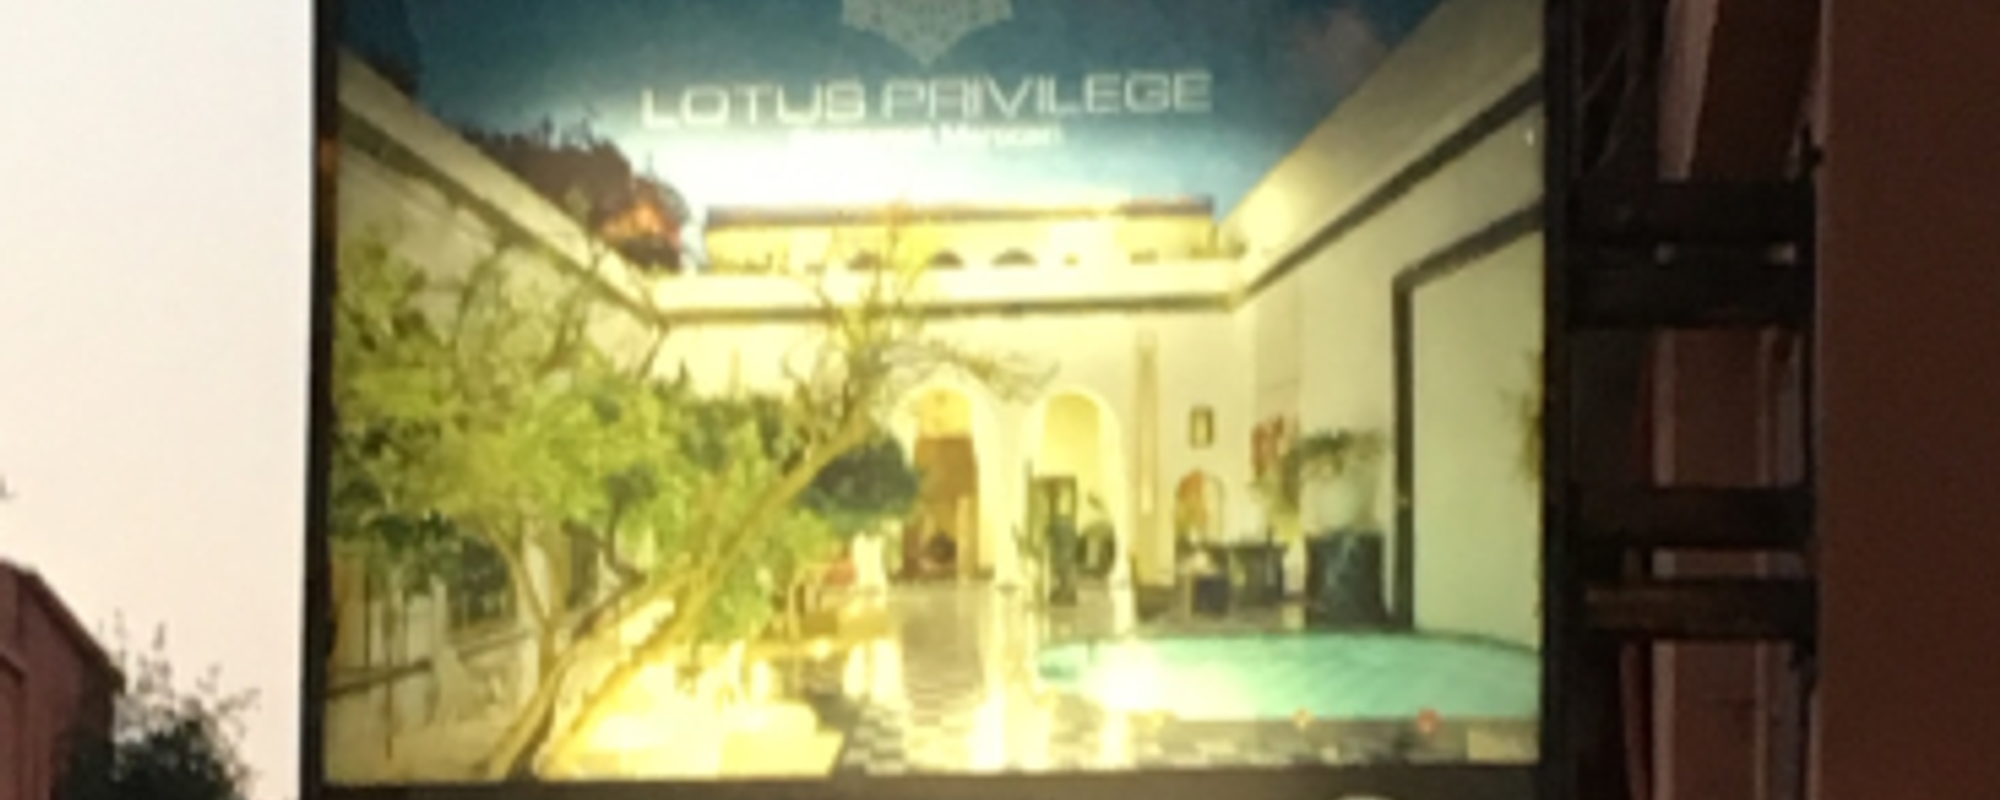 Lotus Privelege Restaurant - Marrakech, Morocco